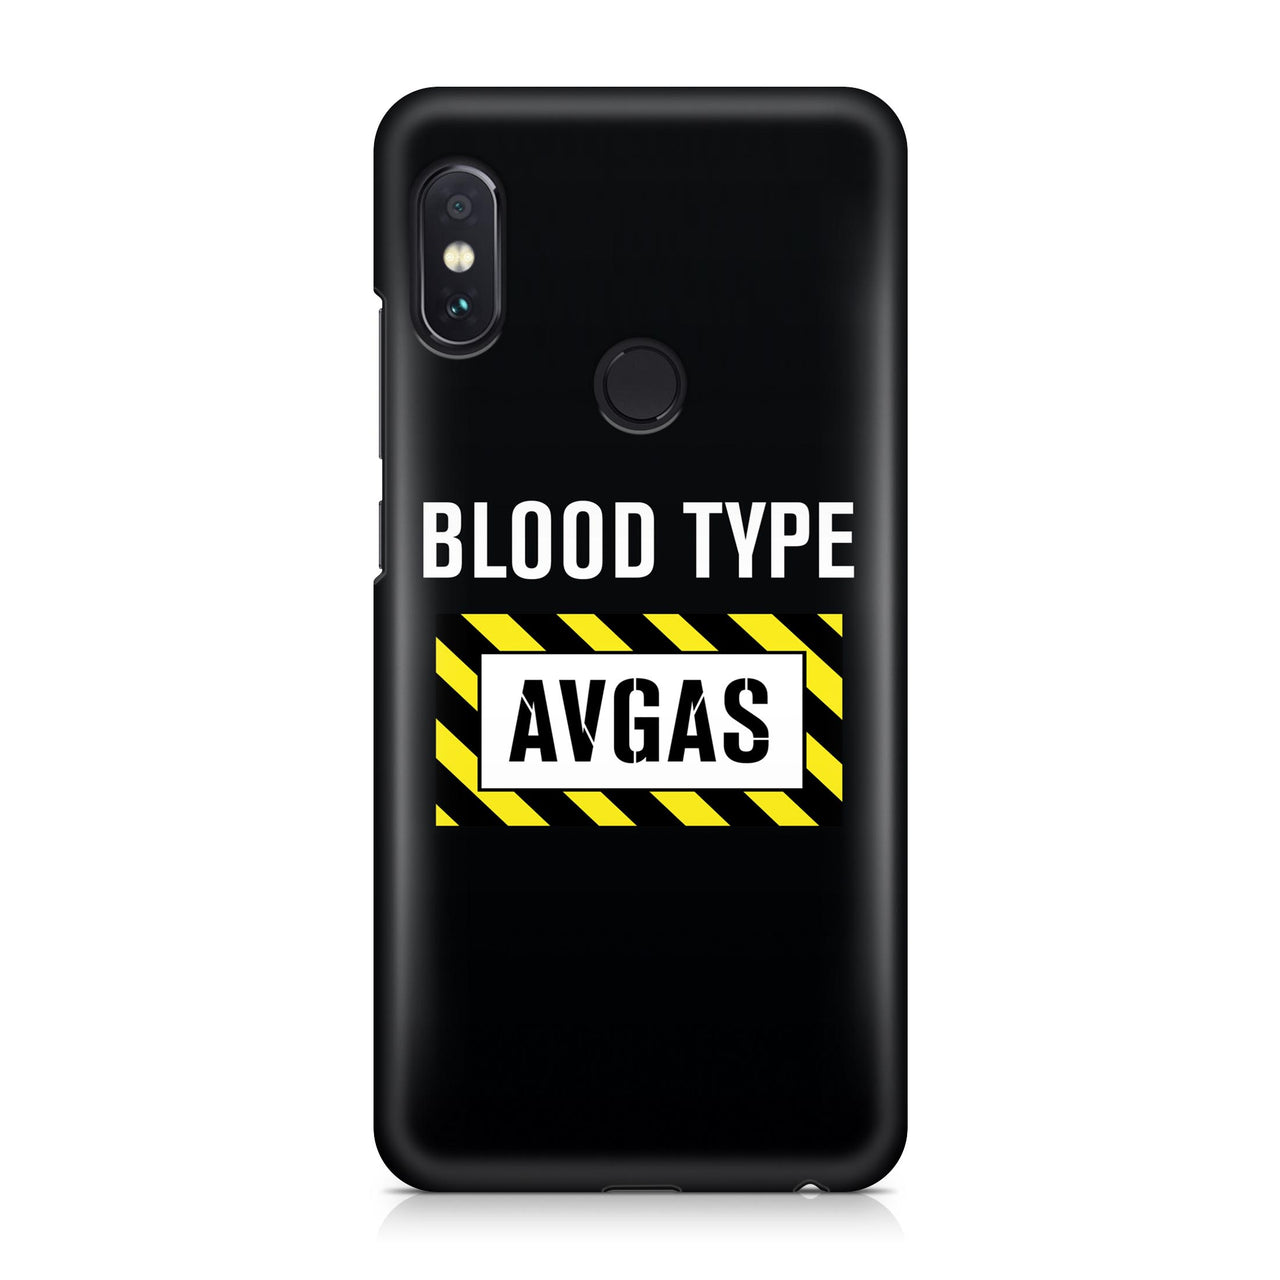 Blood Type Avgas Designed Xiaomi Cases